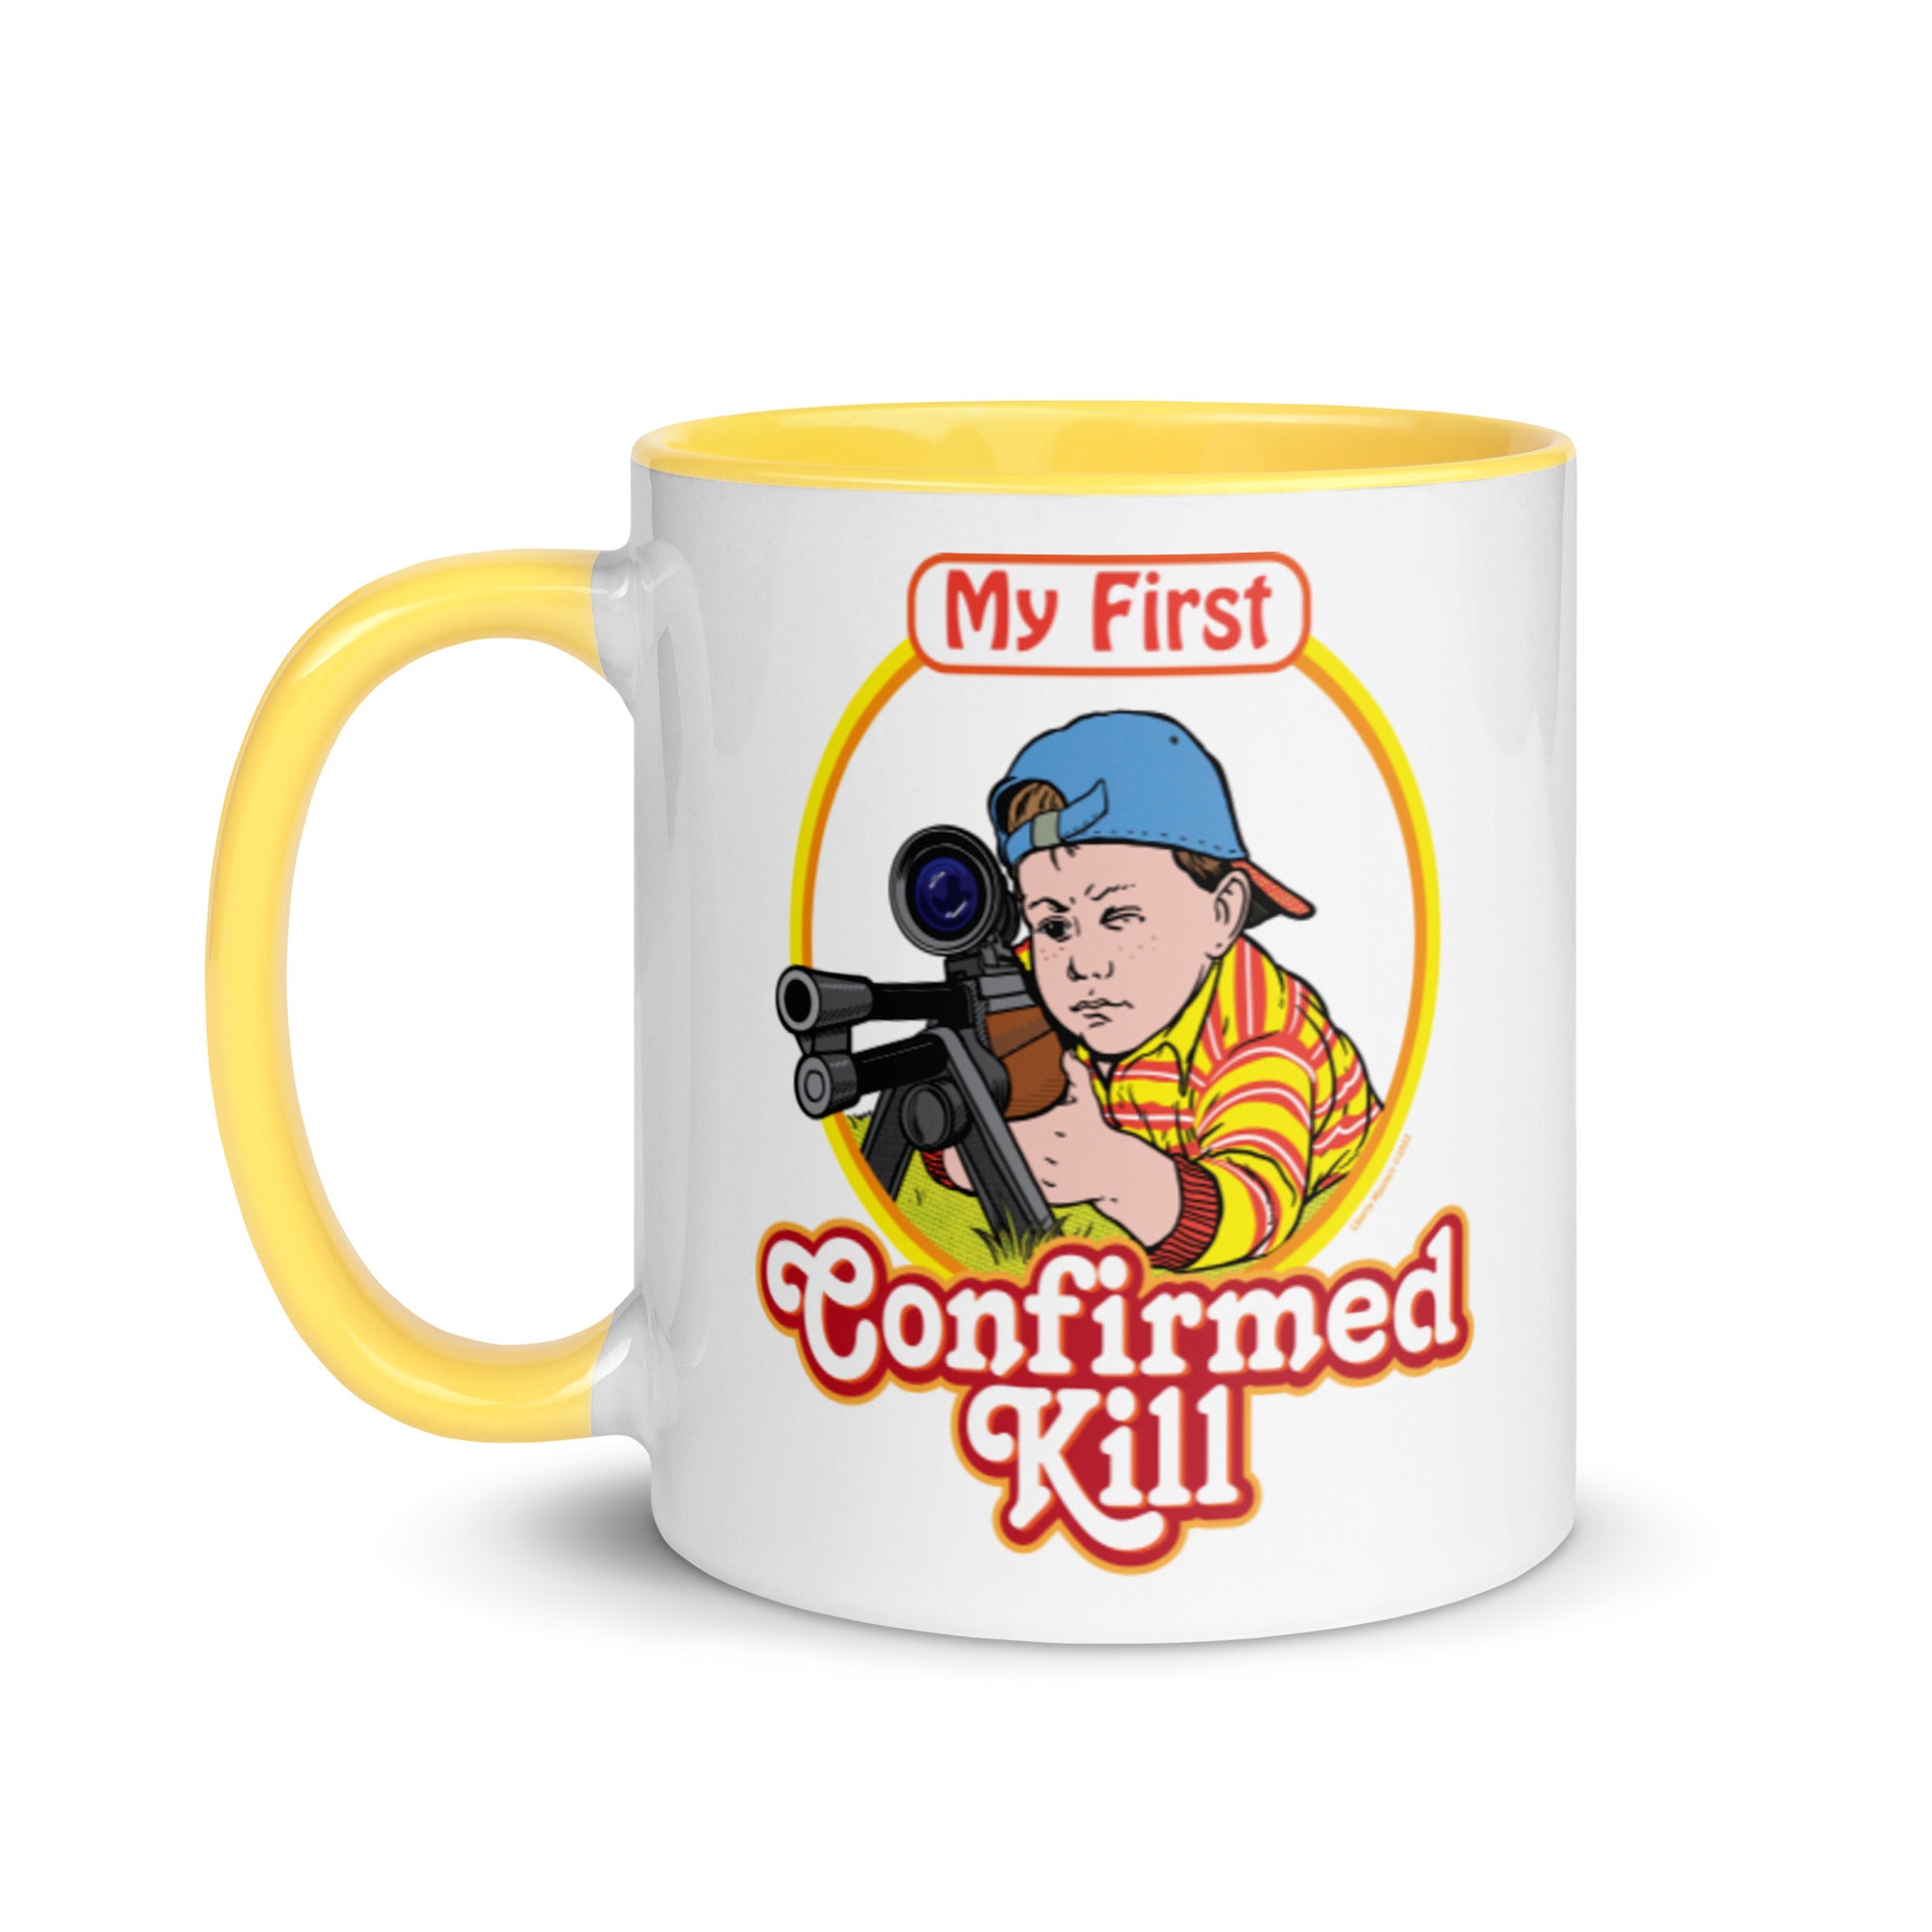 My First confirmed Kill Mug